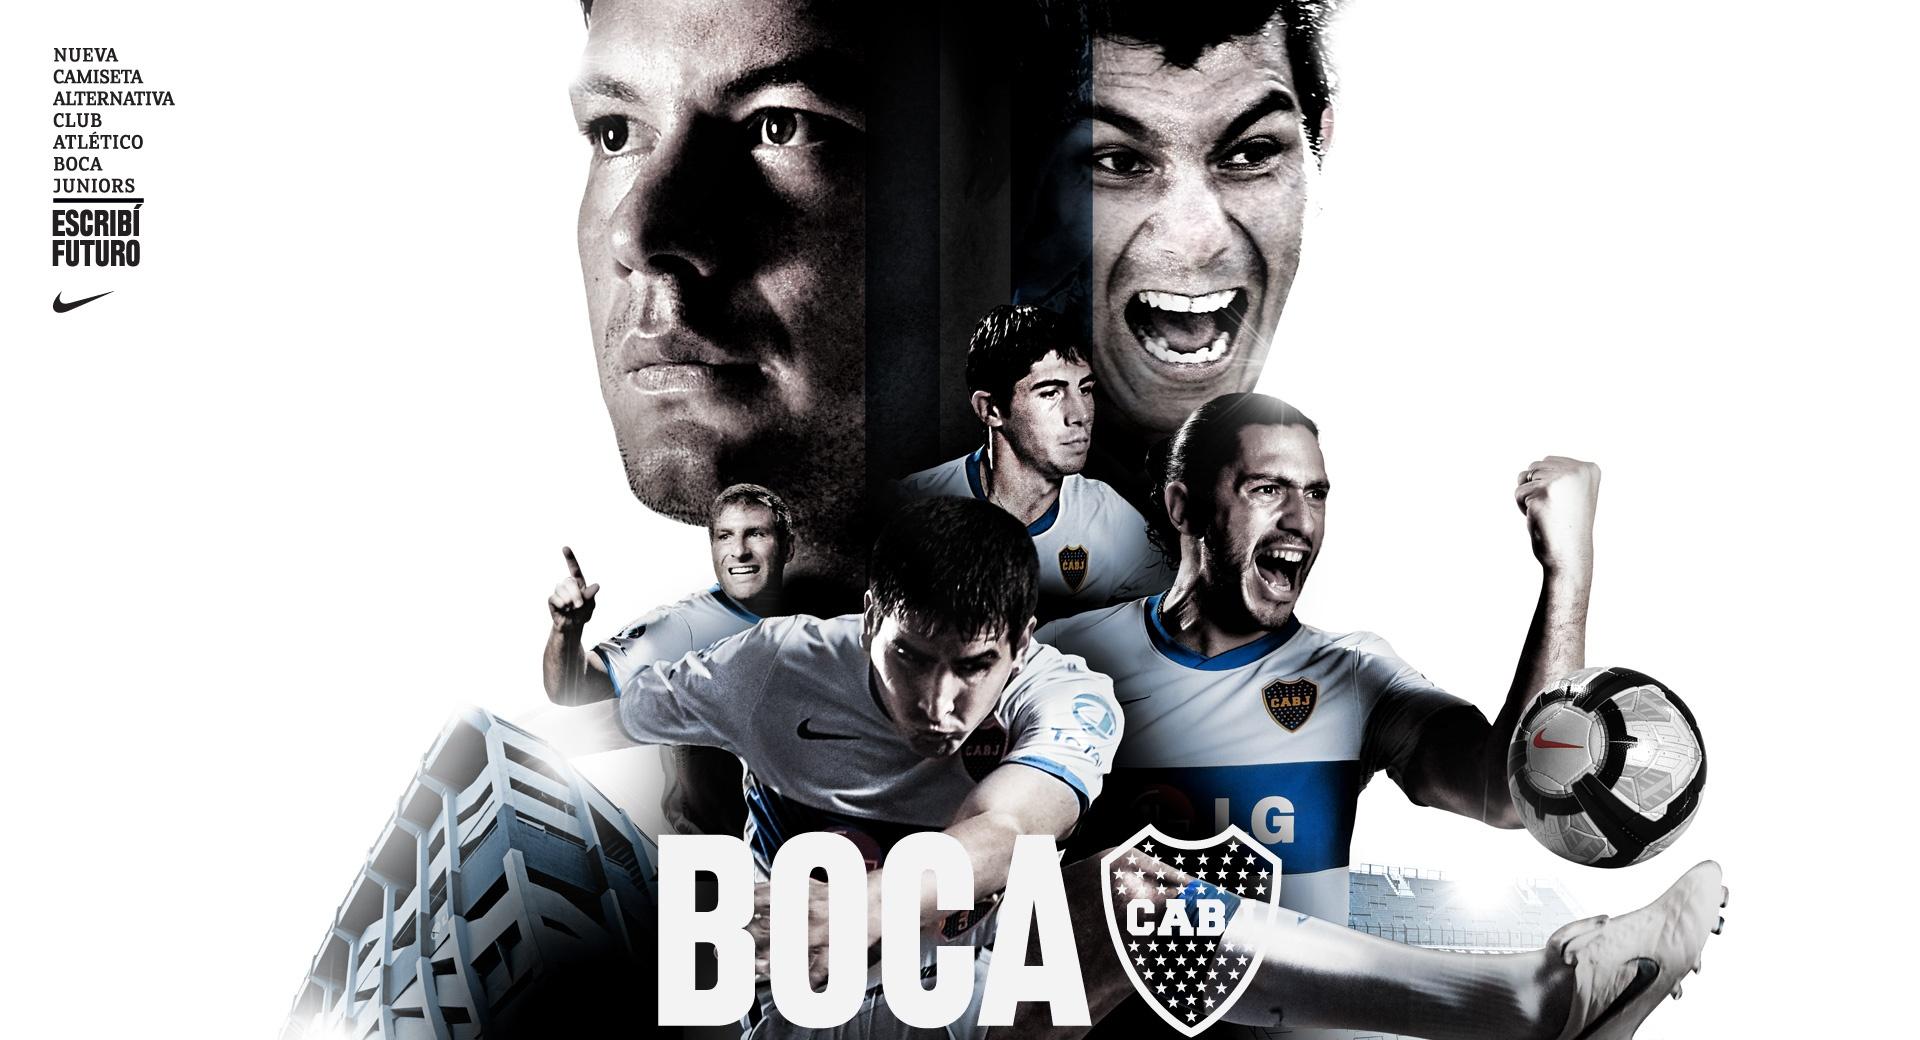 Boca Juniors at 1024 x 1024 iPad size wallpapers HD quality